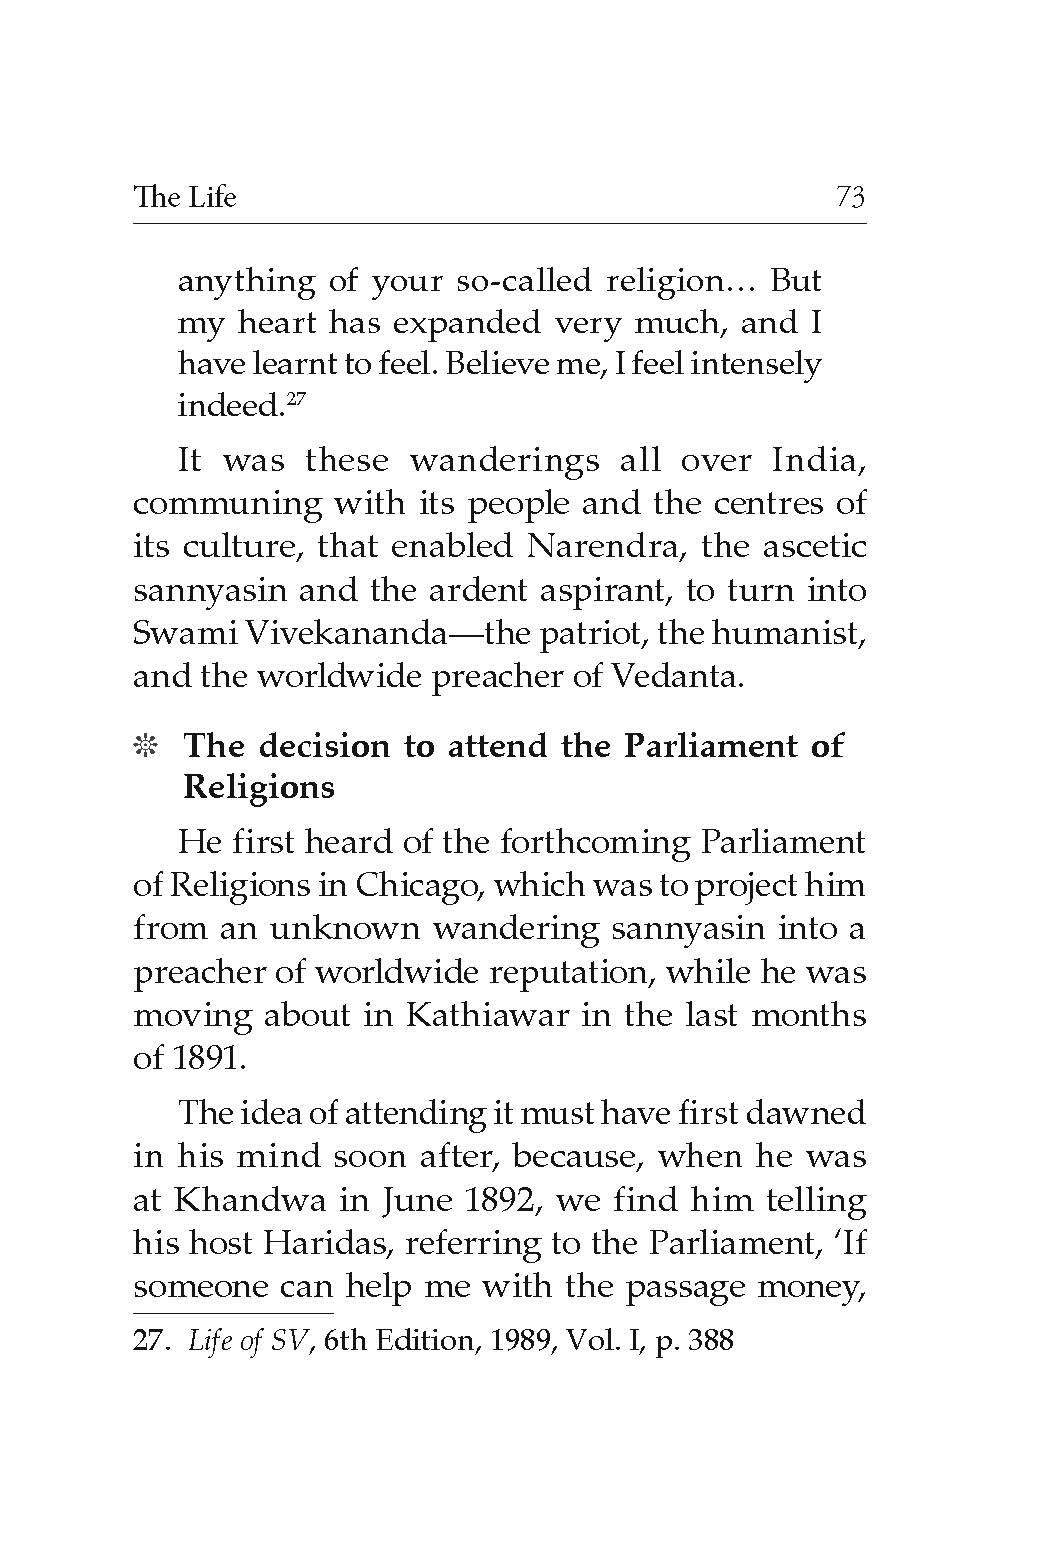 Swami Vivekananda - His Life and Legacy